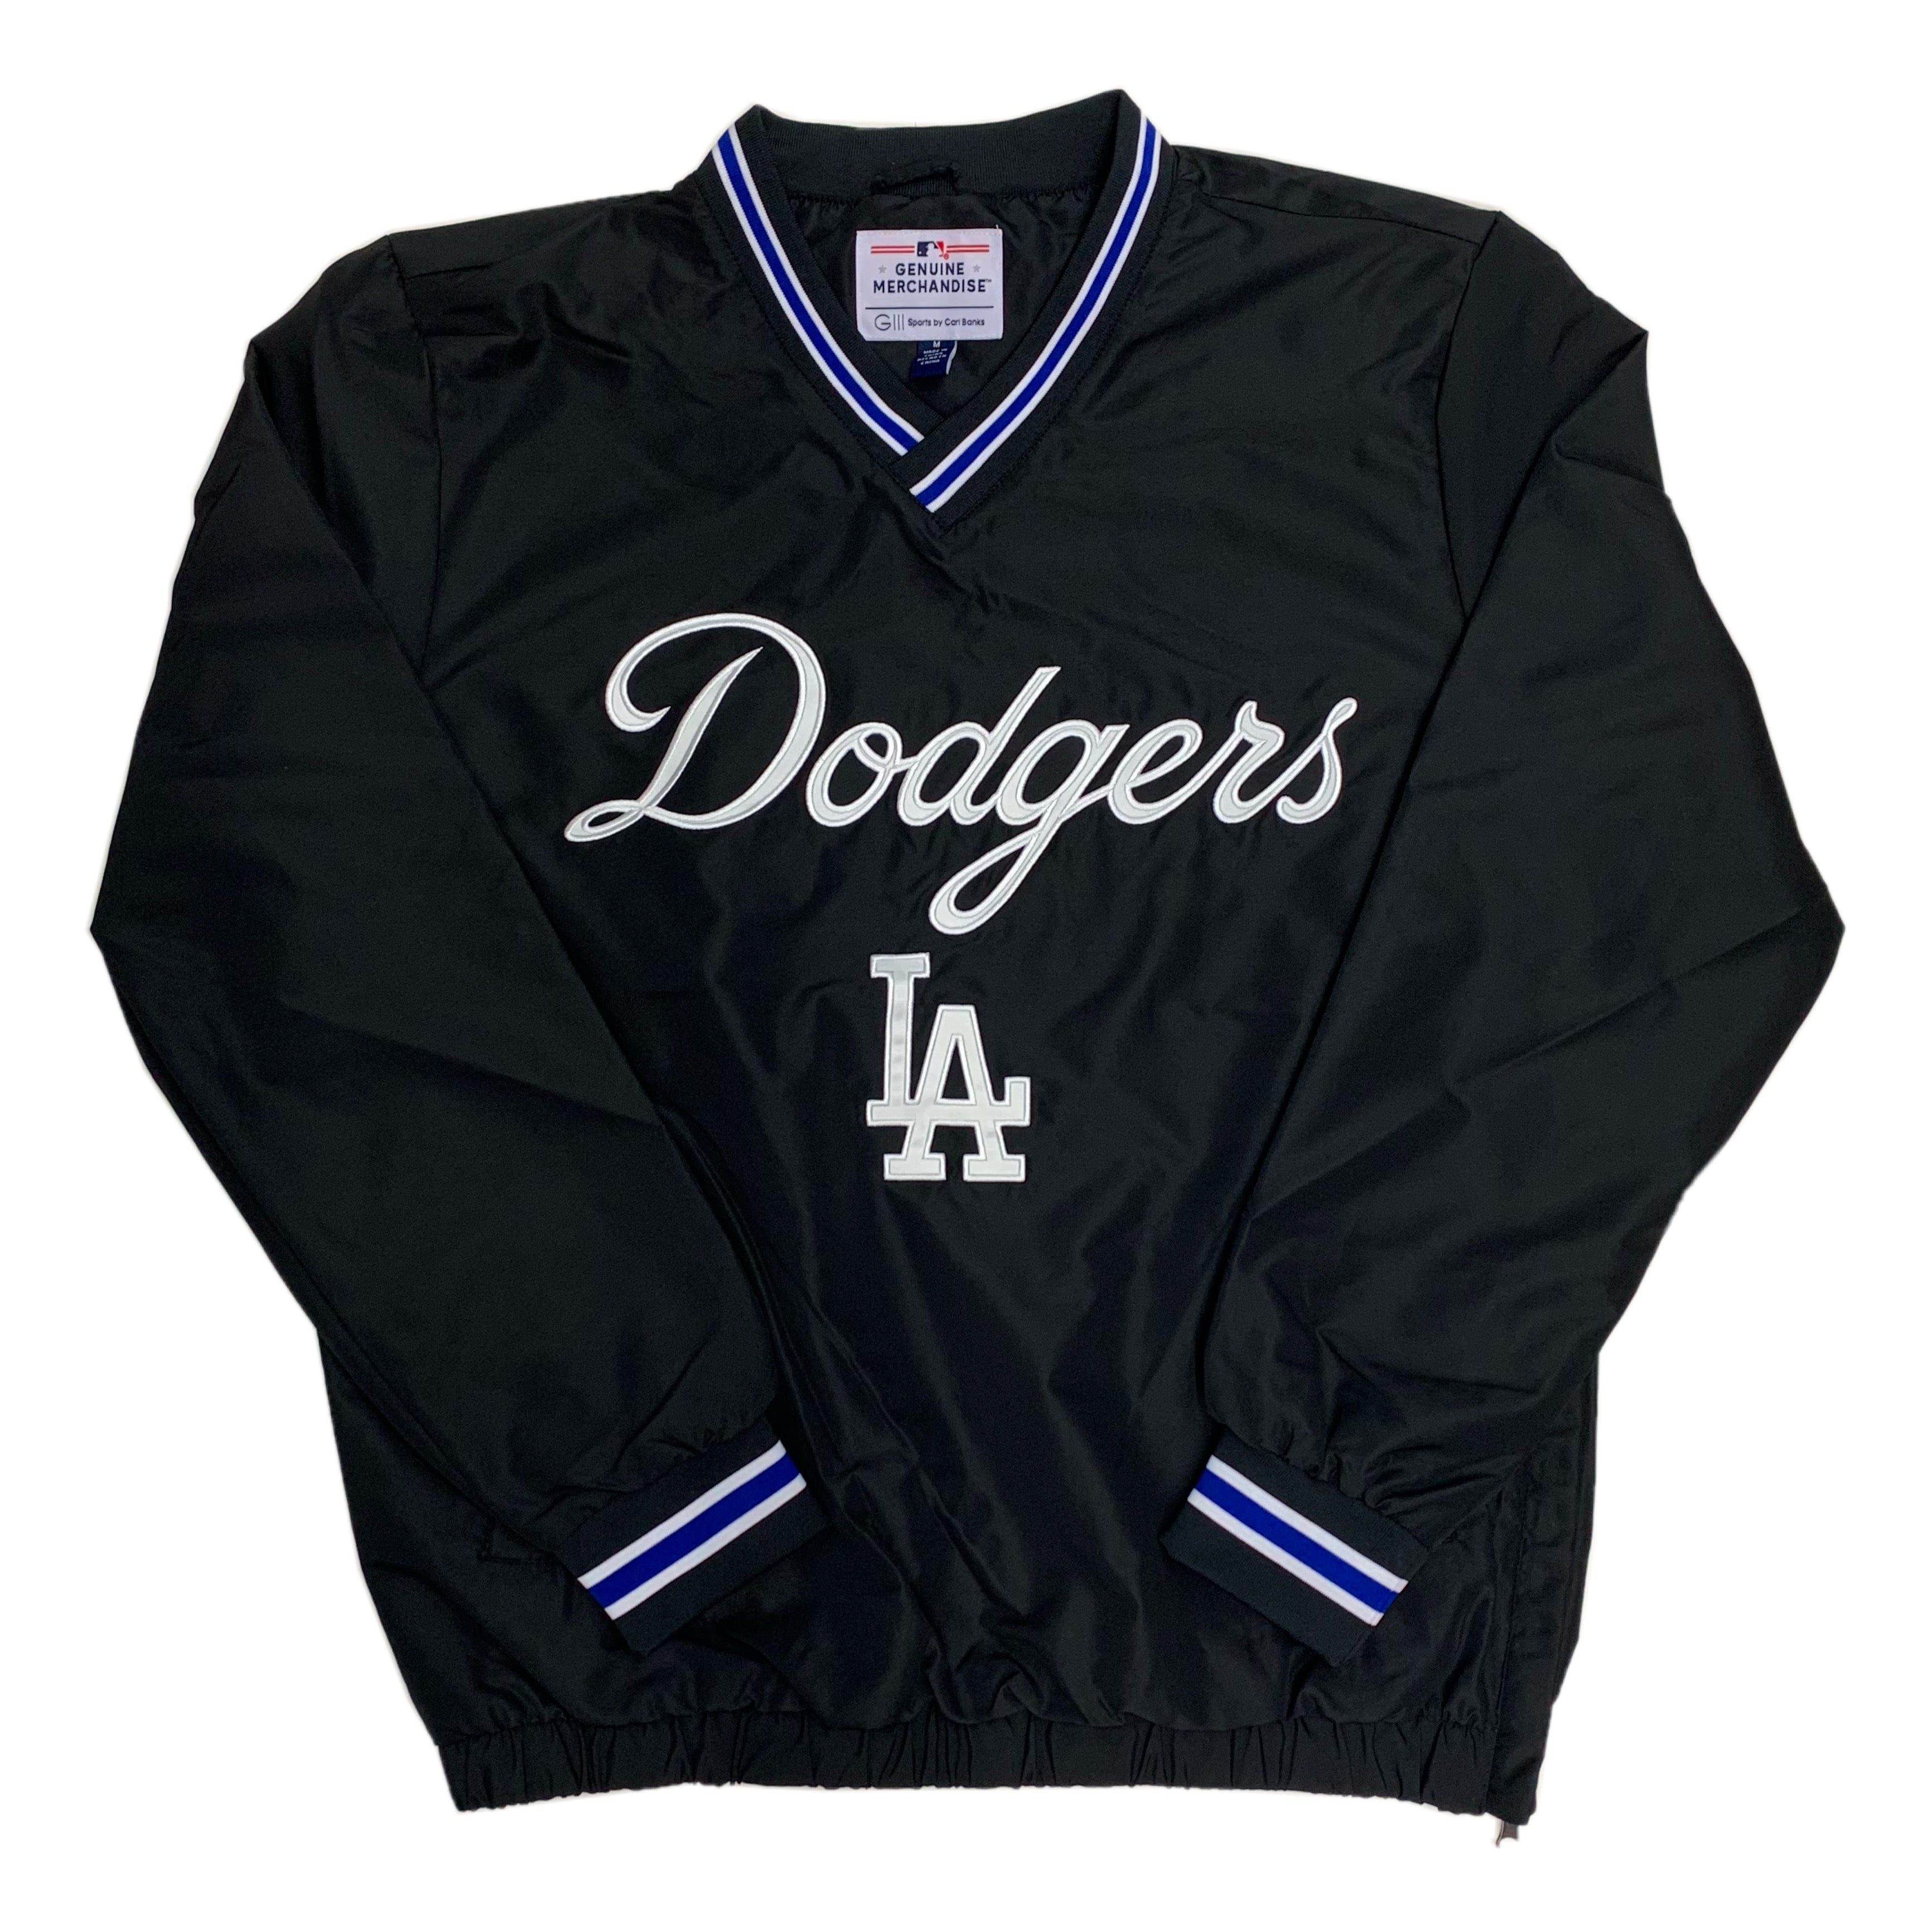 Los Angeles Dodgers Genuine Merchandise MLB Windbreaker Mens Jackets - Blue Blue / 4X Large